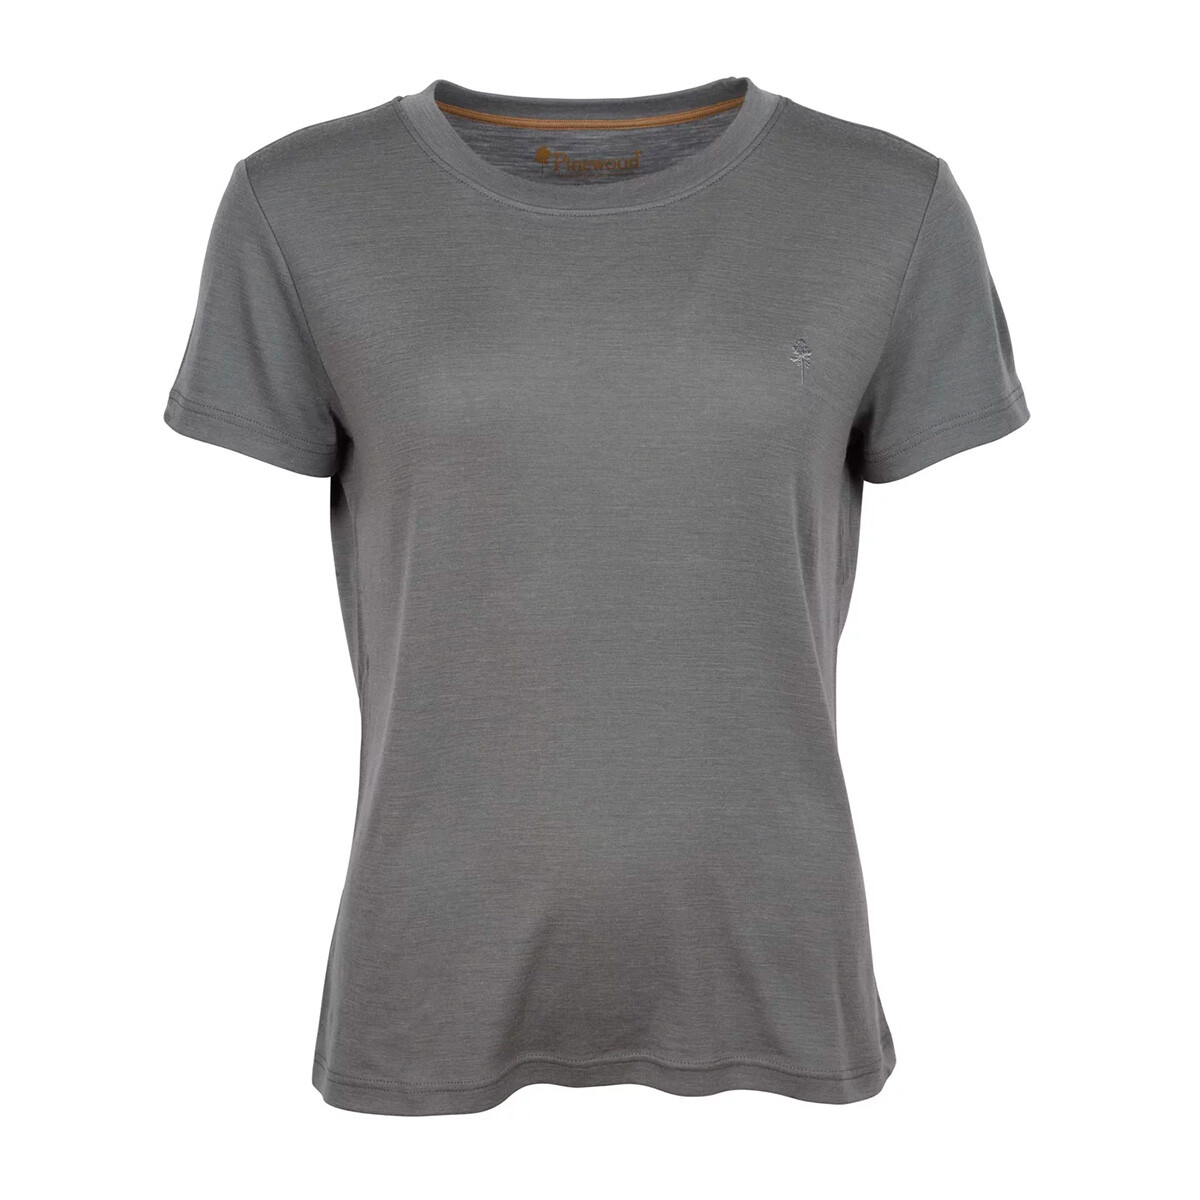 Se Pinewood Travel Merino T-shirt dame (Grey, M) hos Specialbutikken